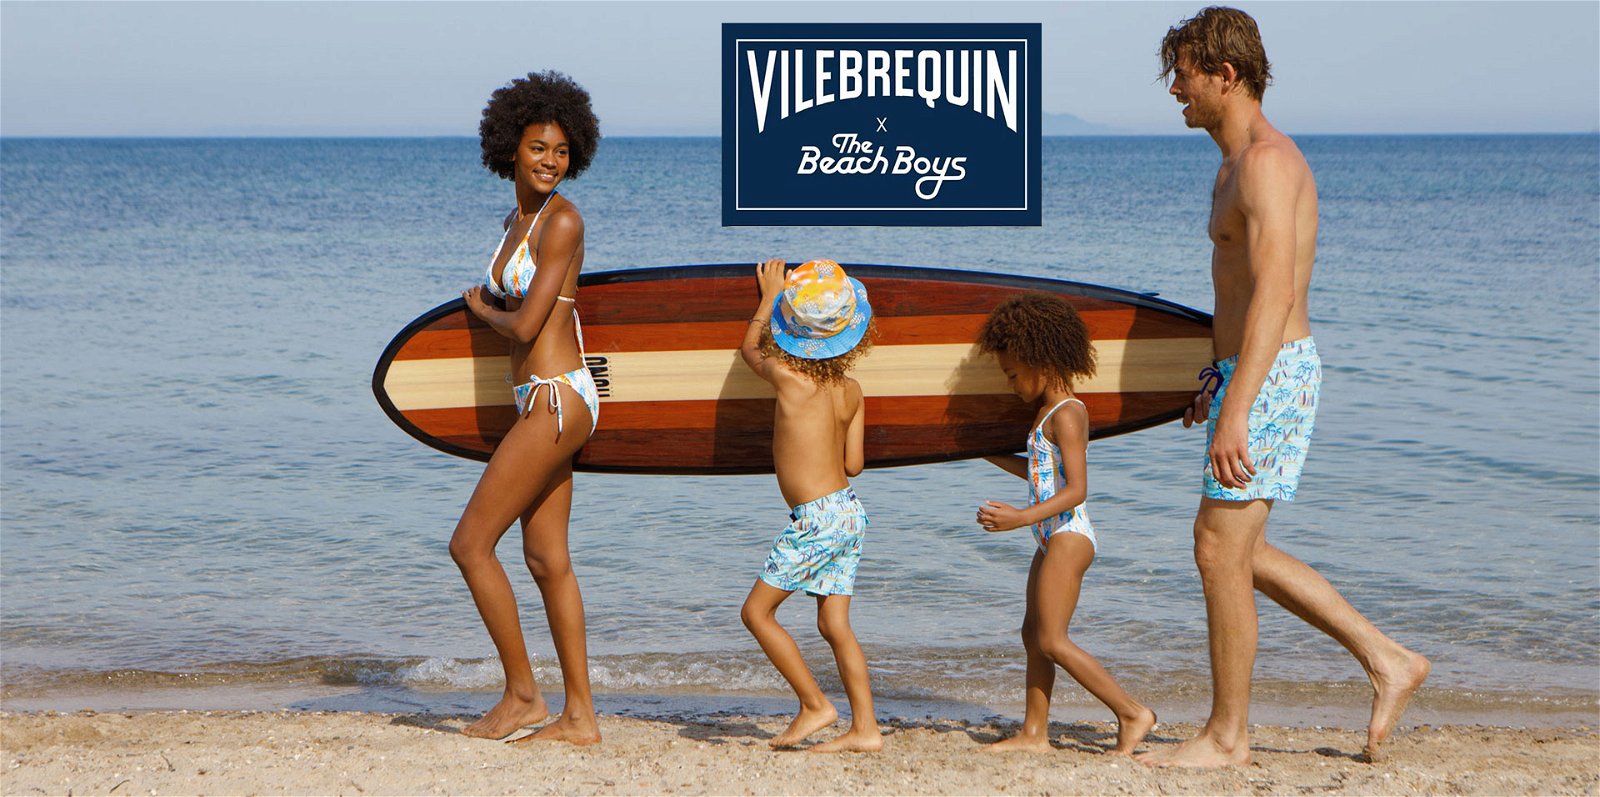 Vilebrequin X Beach Boys